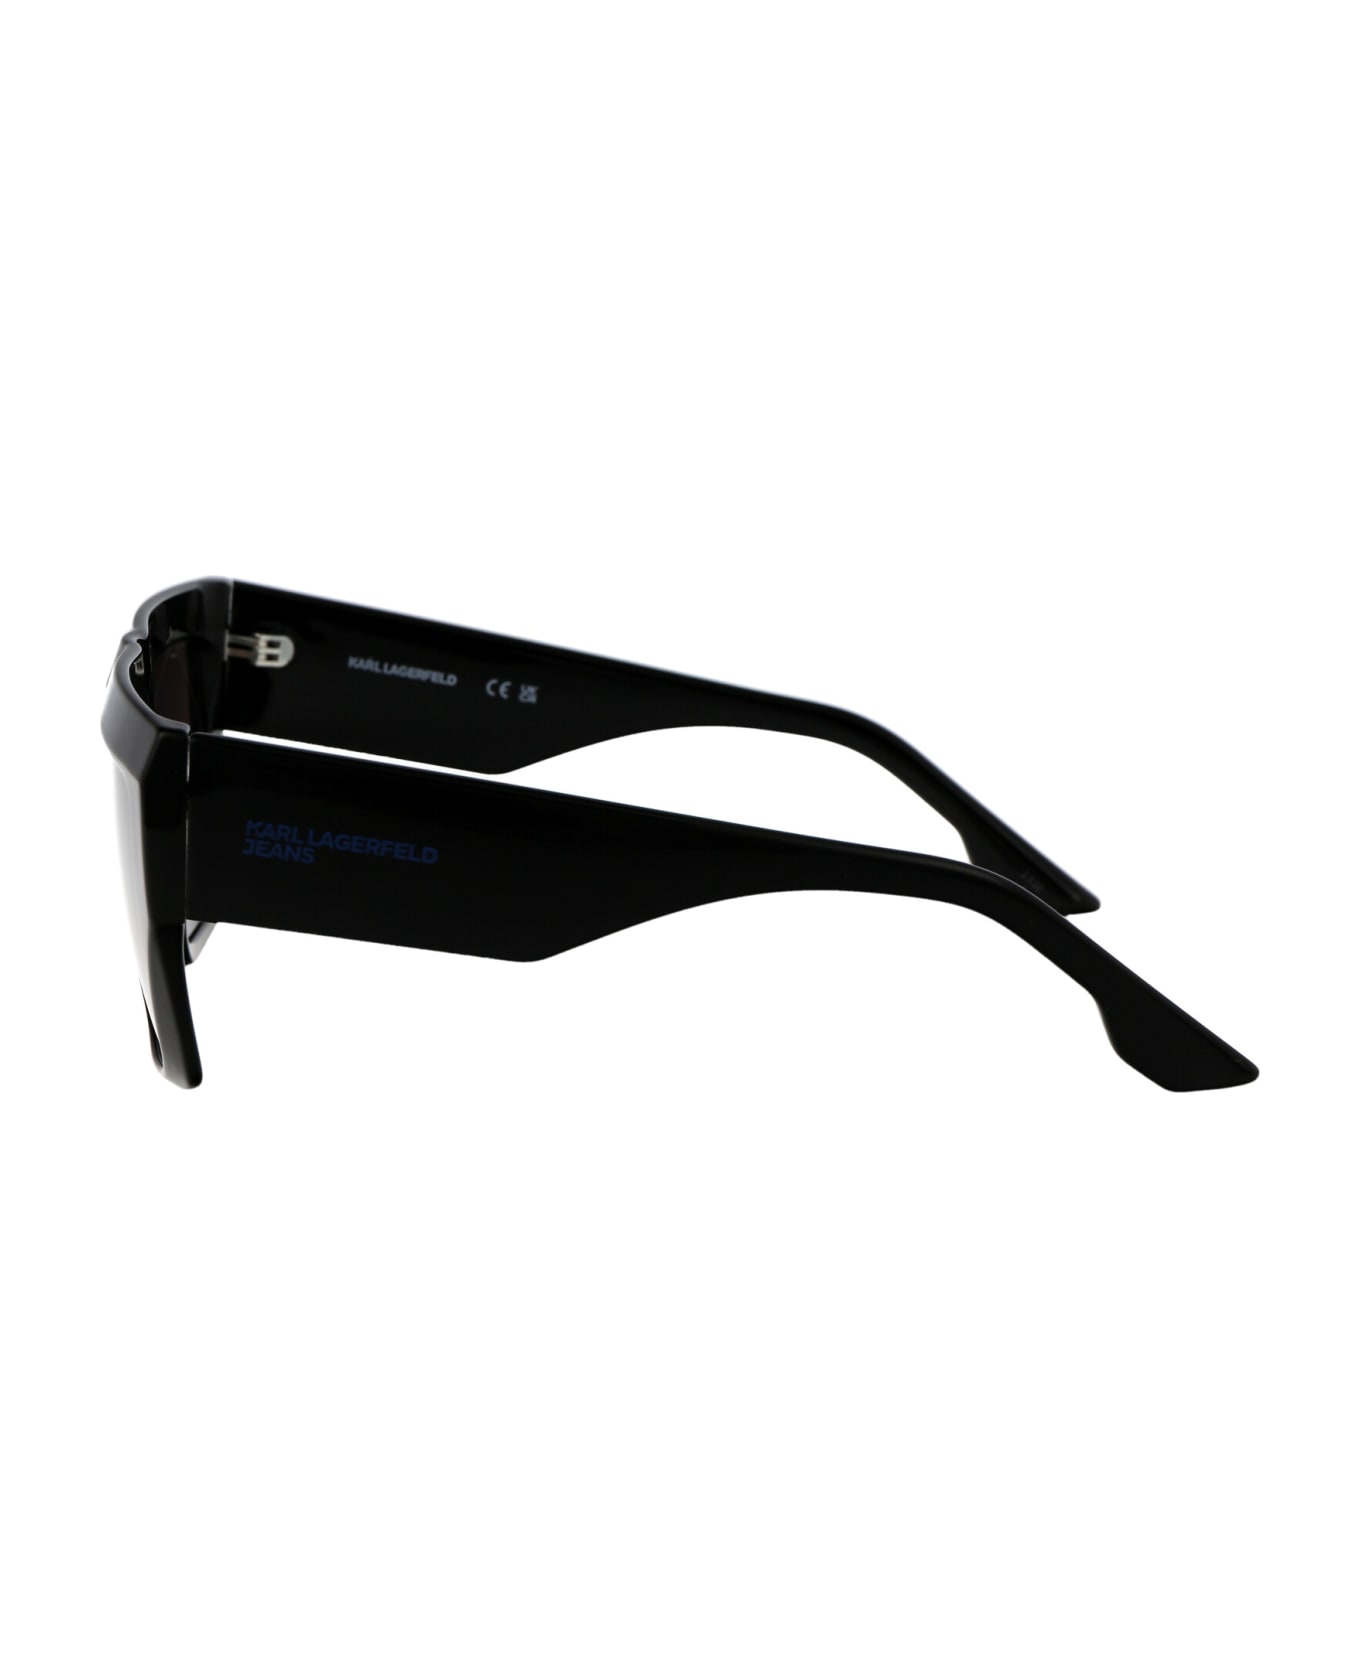 Karl Lagerfeld Kls6148s Sunglasses - 001 SHINY BLACK サングラス